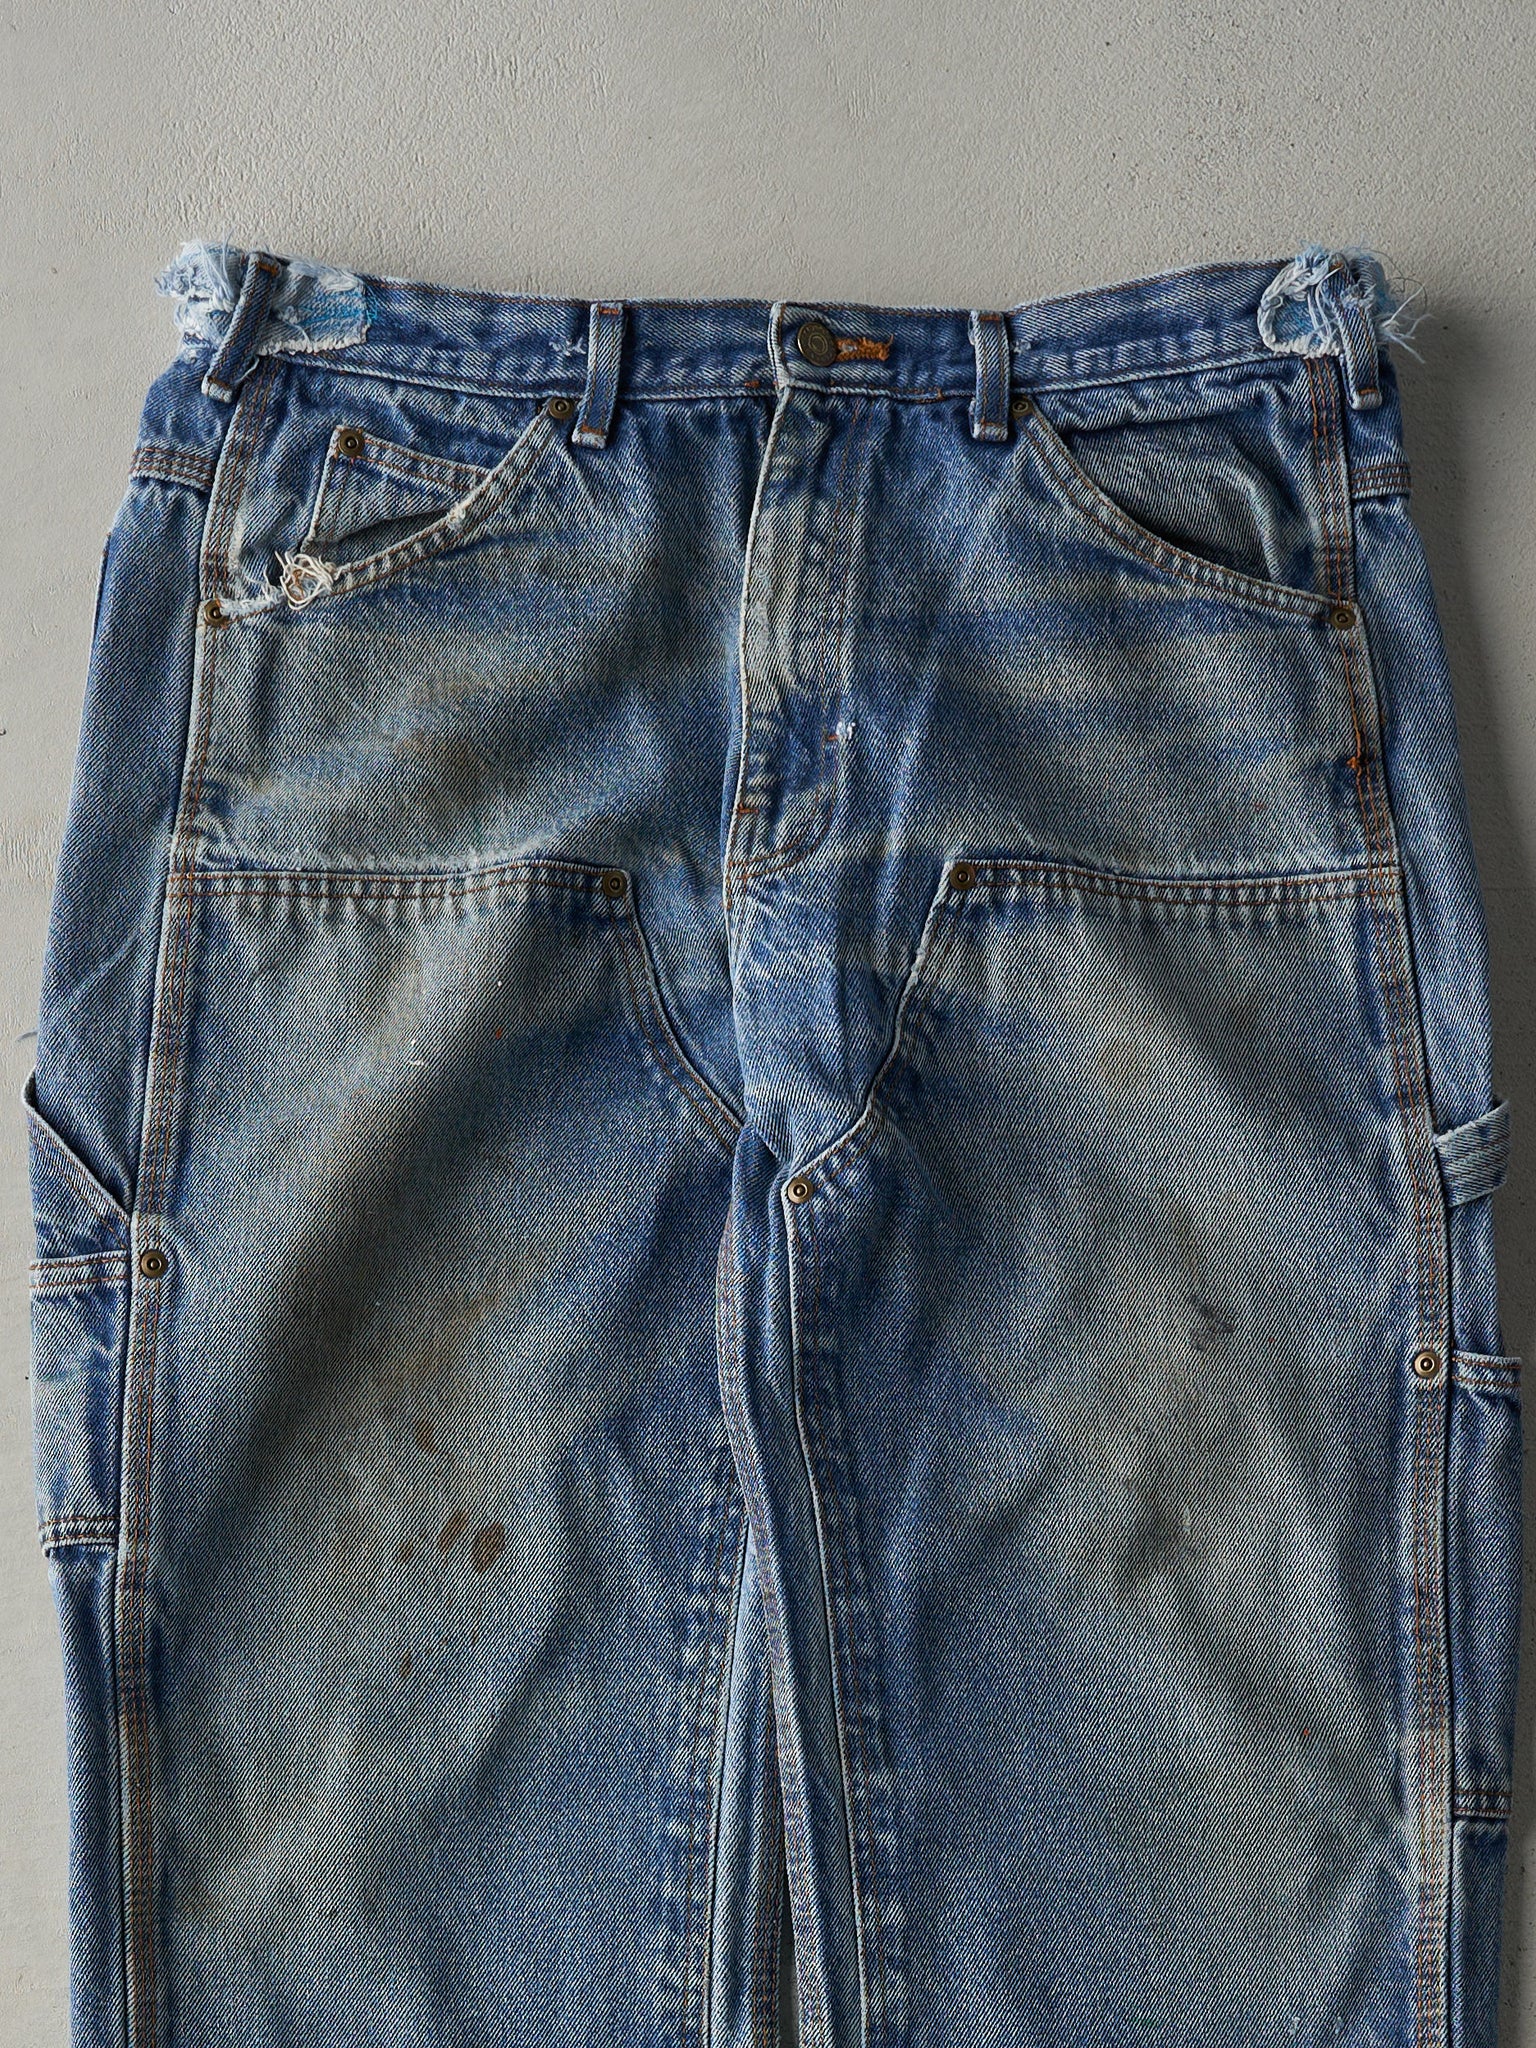 Vintage 90s Light Wash Key Apparel Double Knee Jeans (35x28.5)